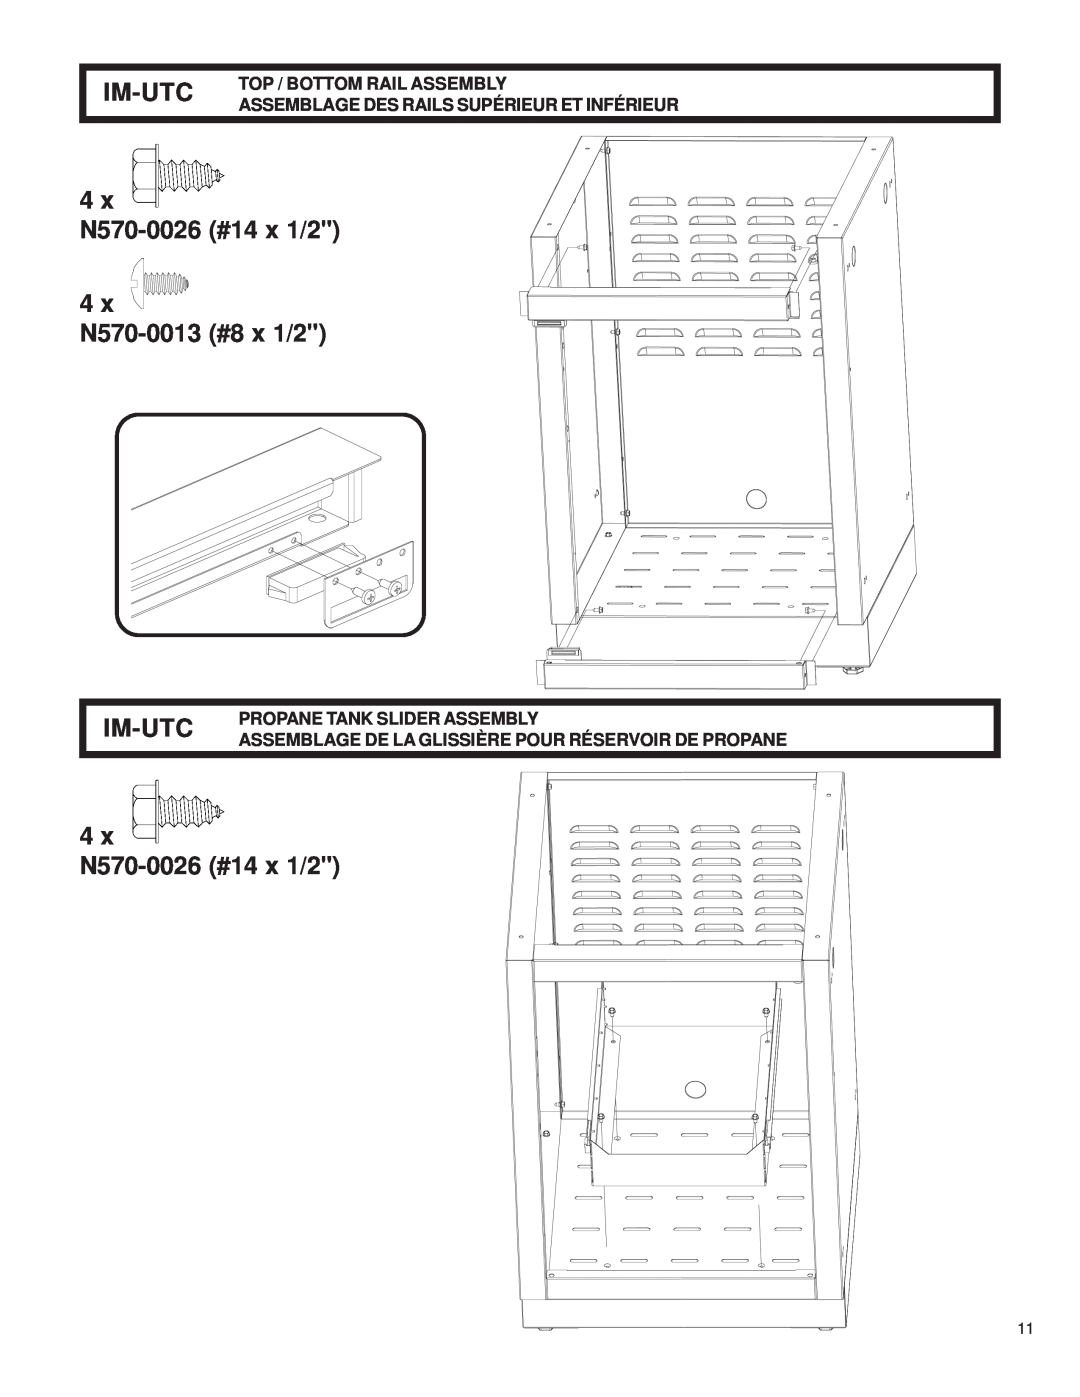 Napoleon Grills 2048-OS, 204830-OS manual N570-0013 #8 x 1/2, Propane Tank Slider Assembly, Im-Utc, 4 x N570-0026 #14 x 1/2 